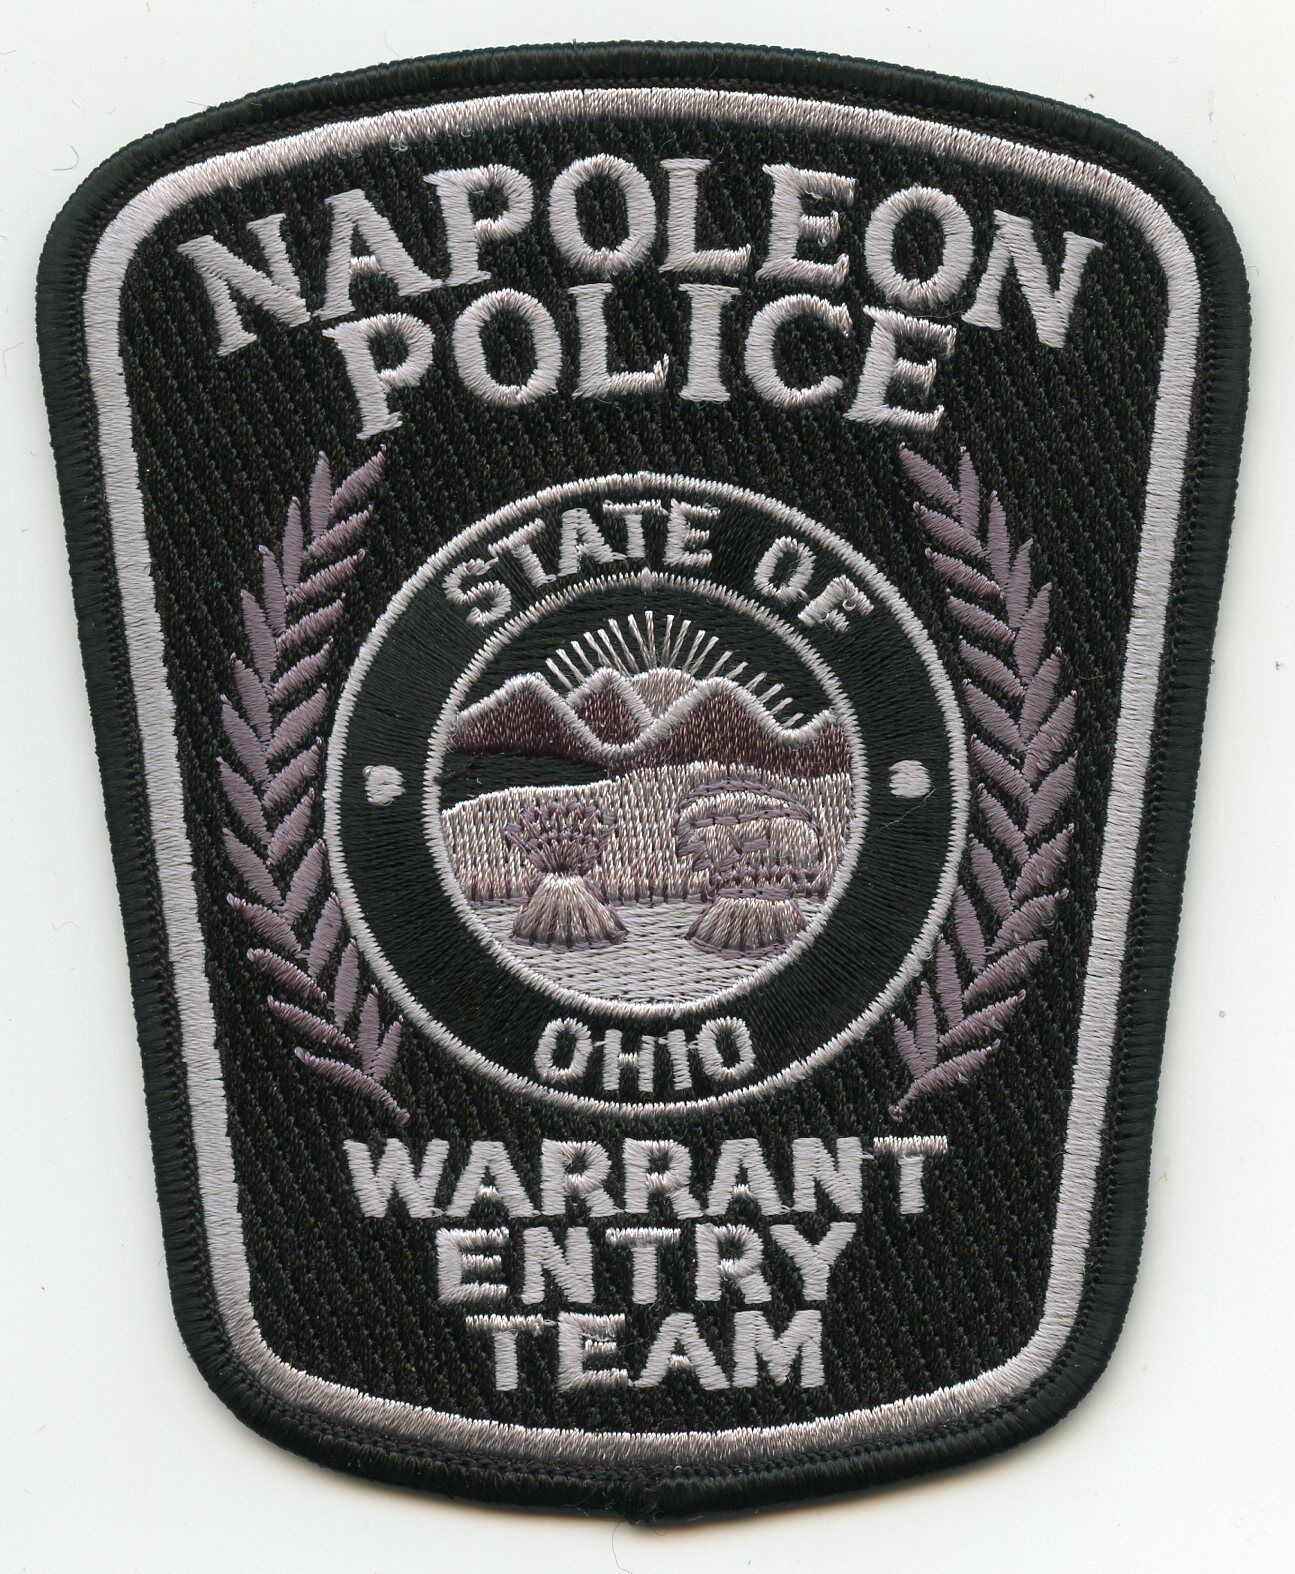 NAPOLEON OHIO OH Warrant Entry Team POLICE PATCH